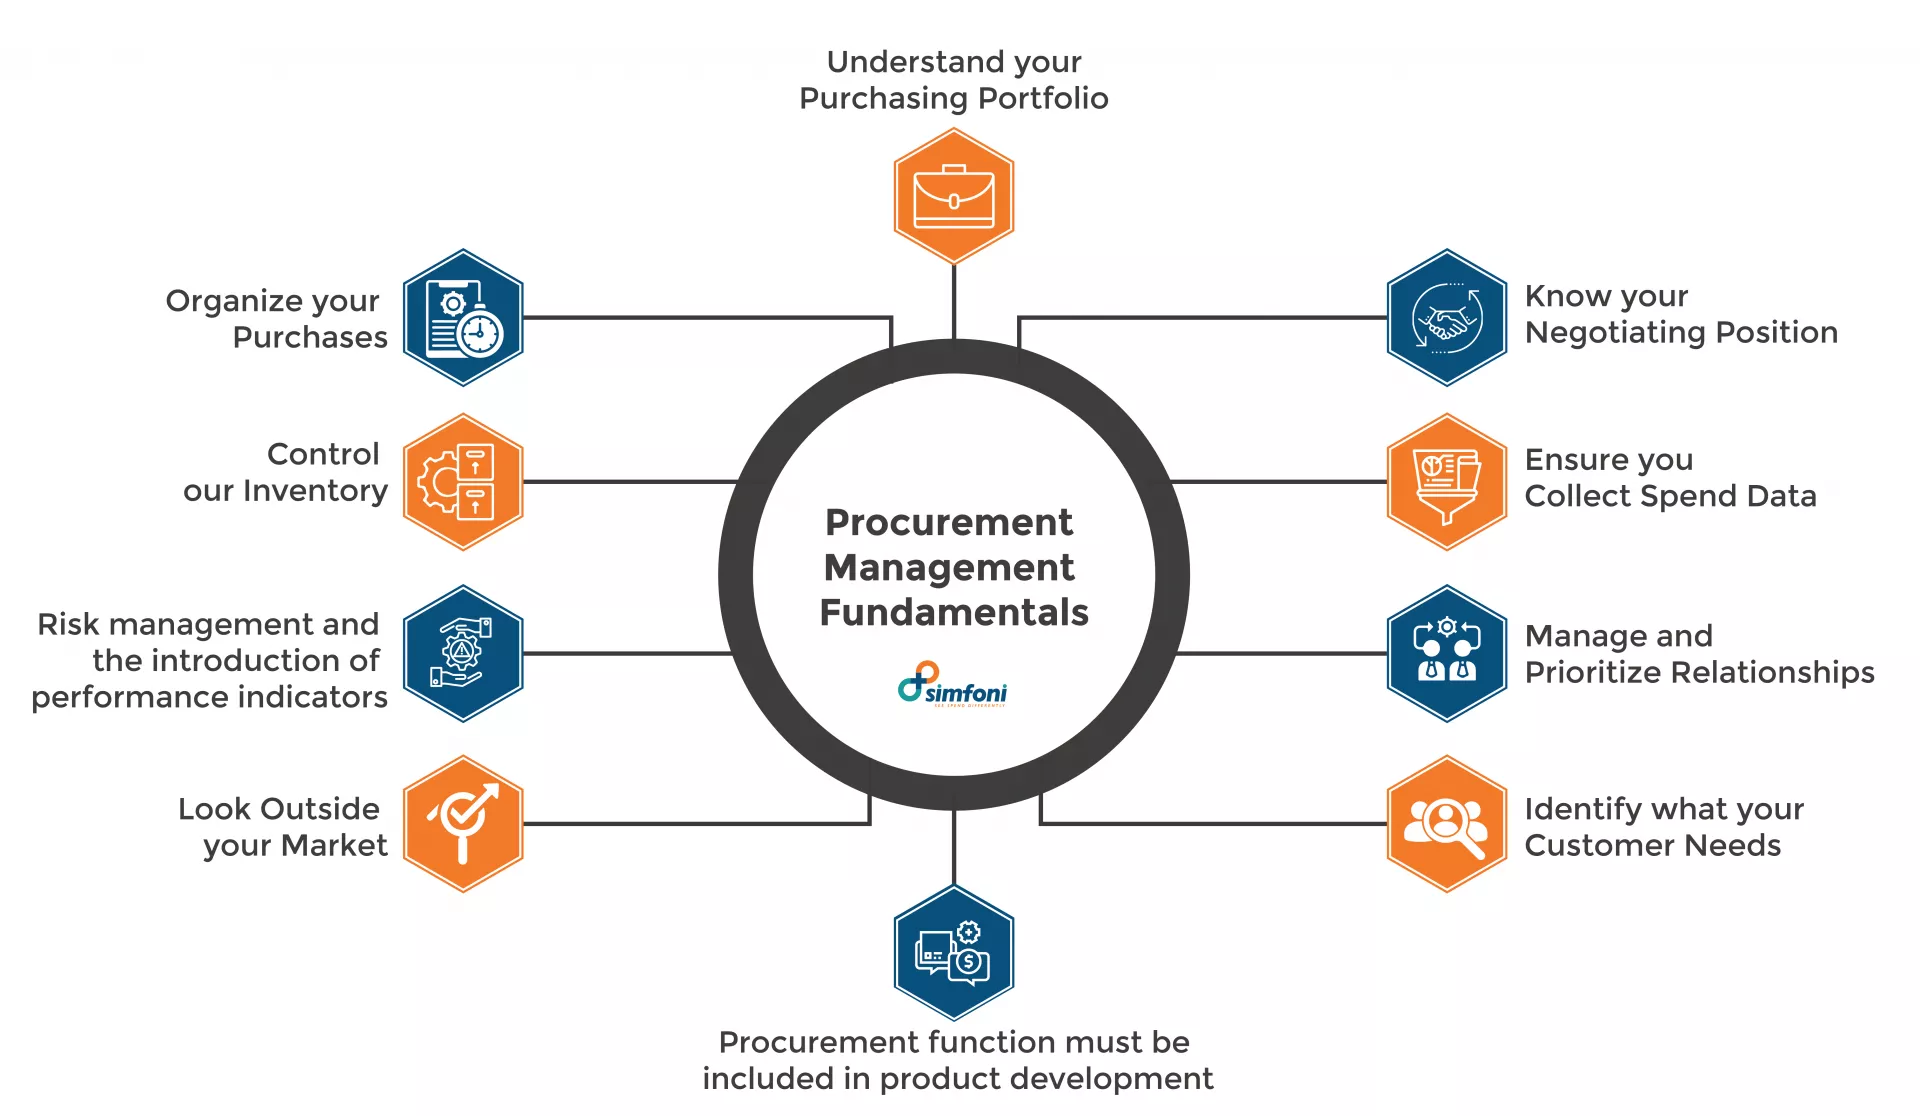 Procurement Management Fundamentals